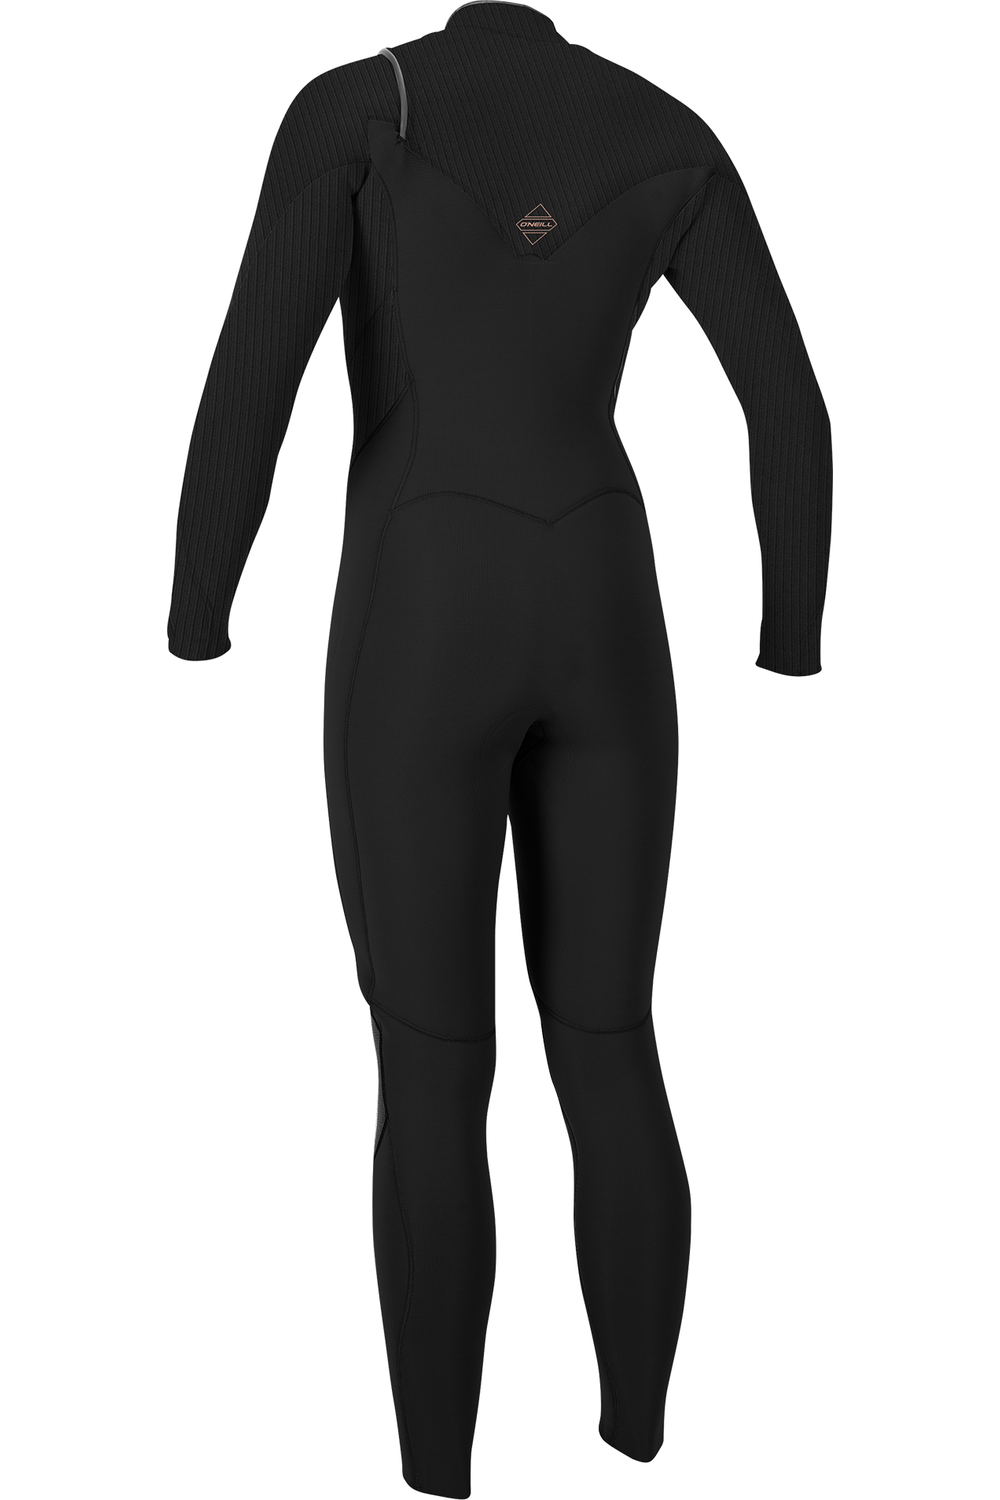 O'Neill Hyperfreak 5/4+ Women's Wetsuit With Chest Zip In Black